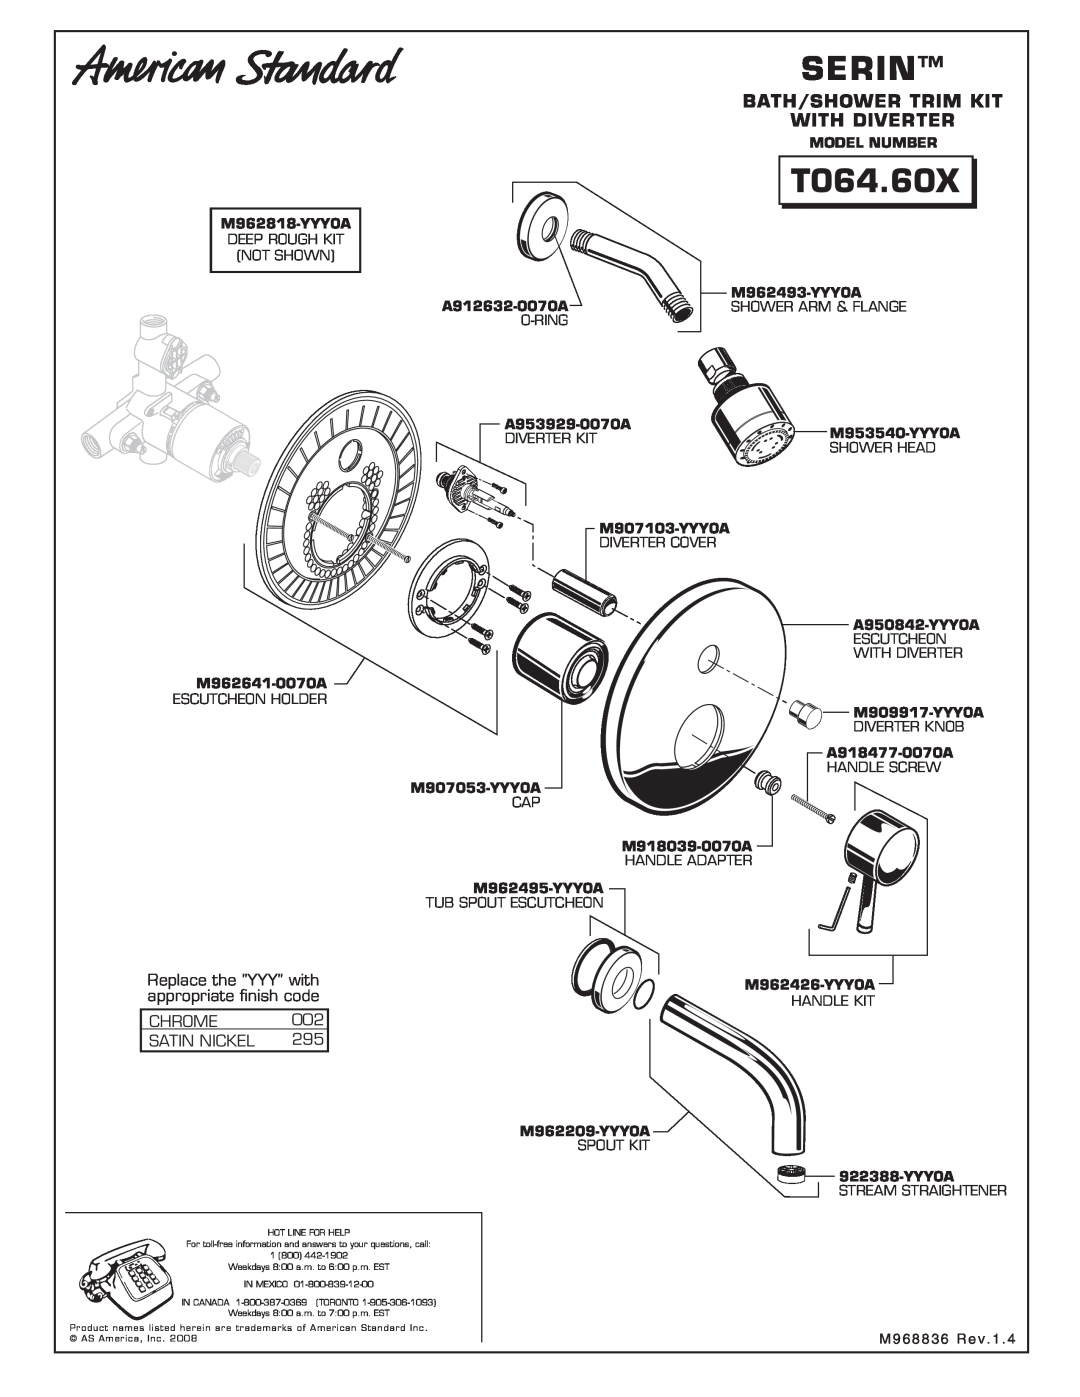 American Standard T064.60X installation instructions Serin, Bath/Shower Trim Kit With Diverter 